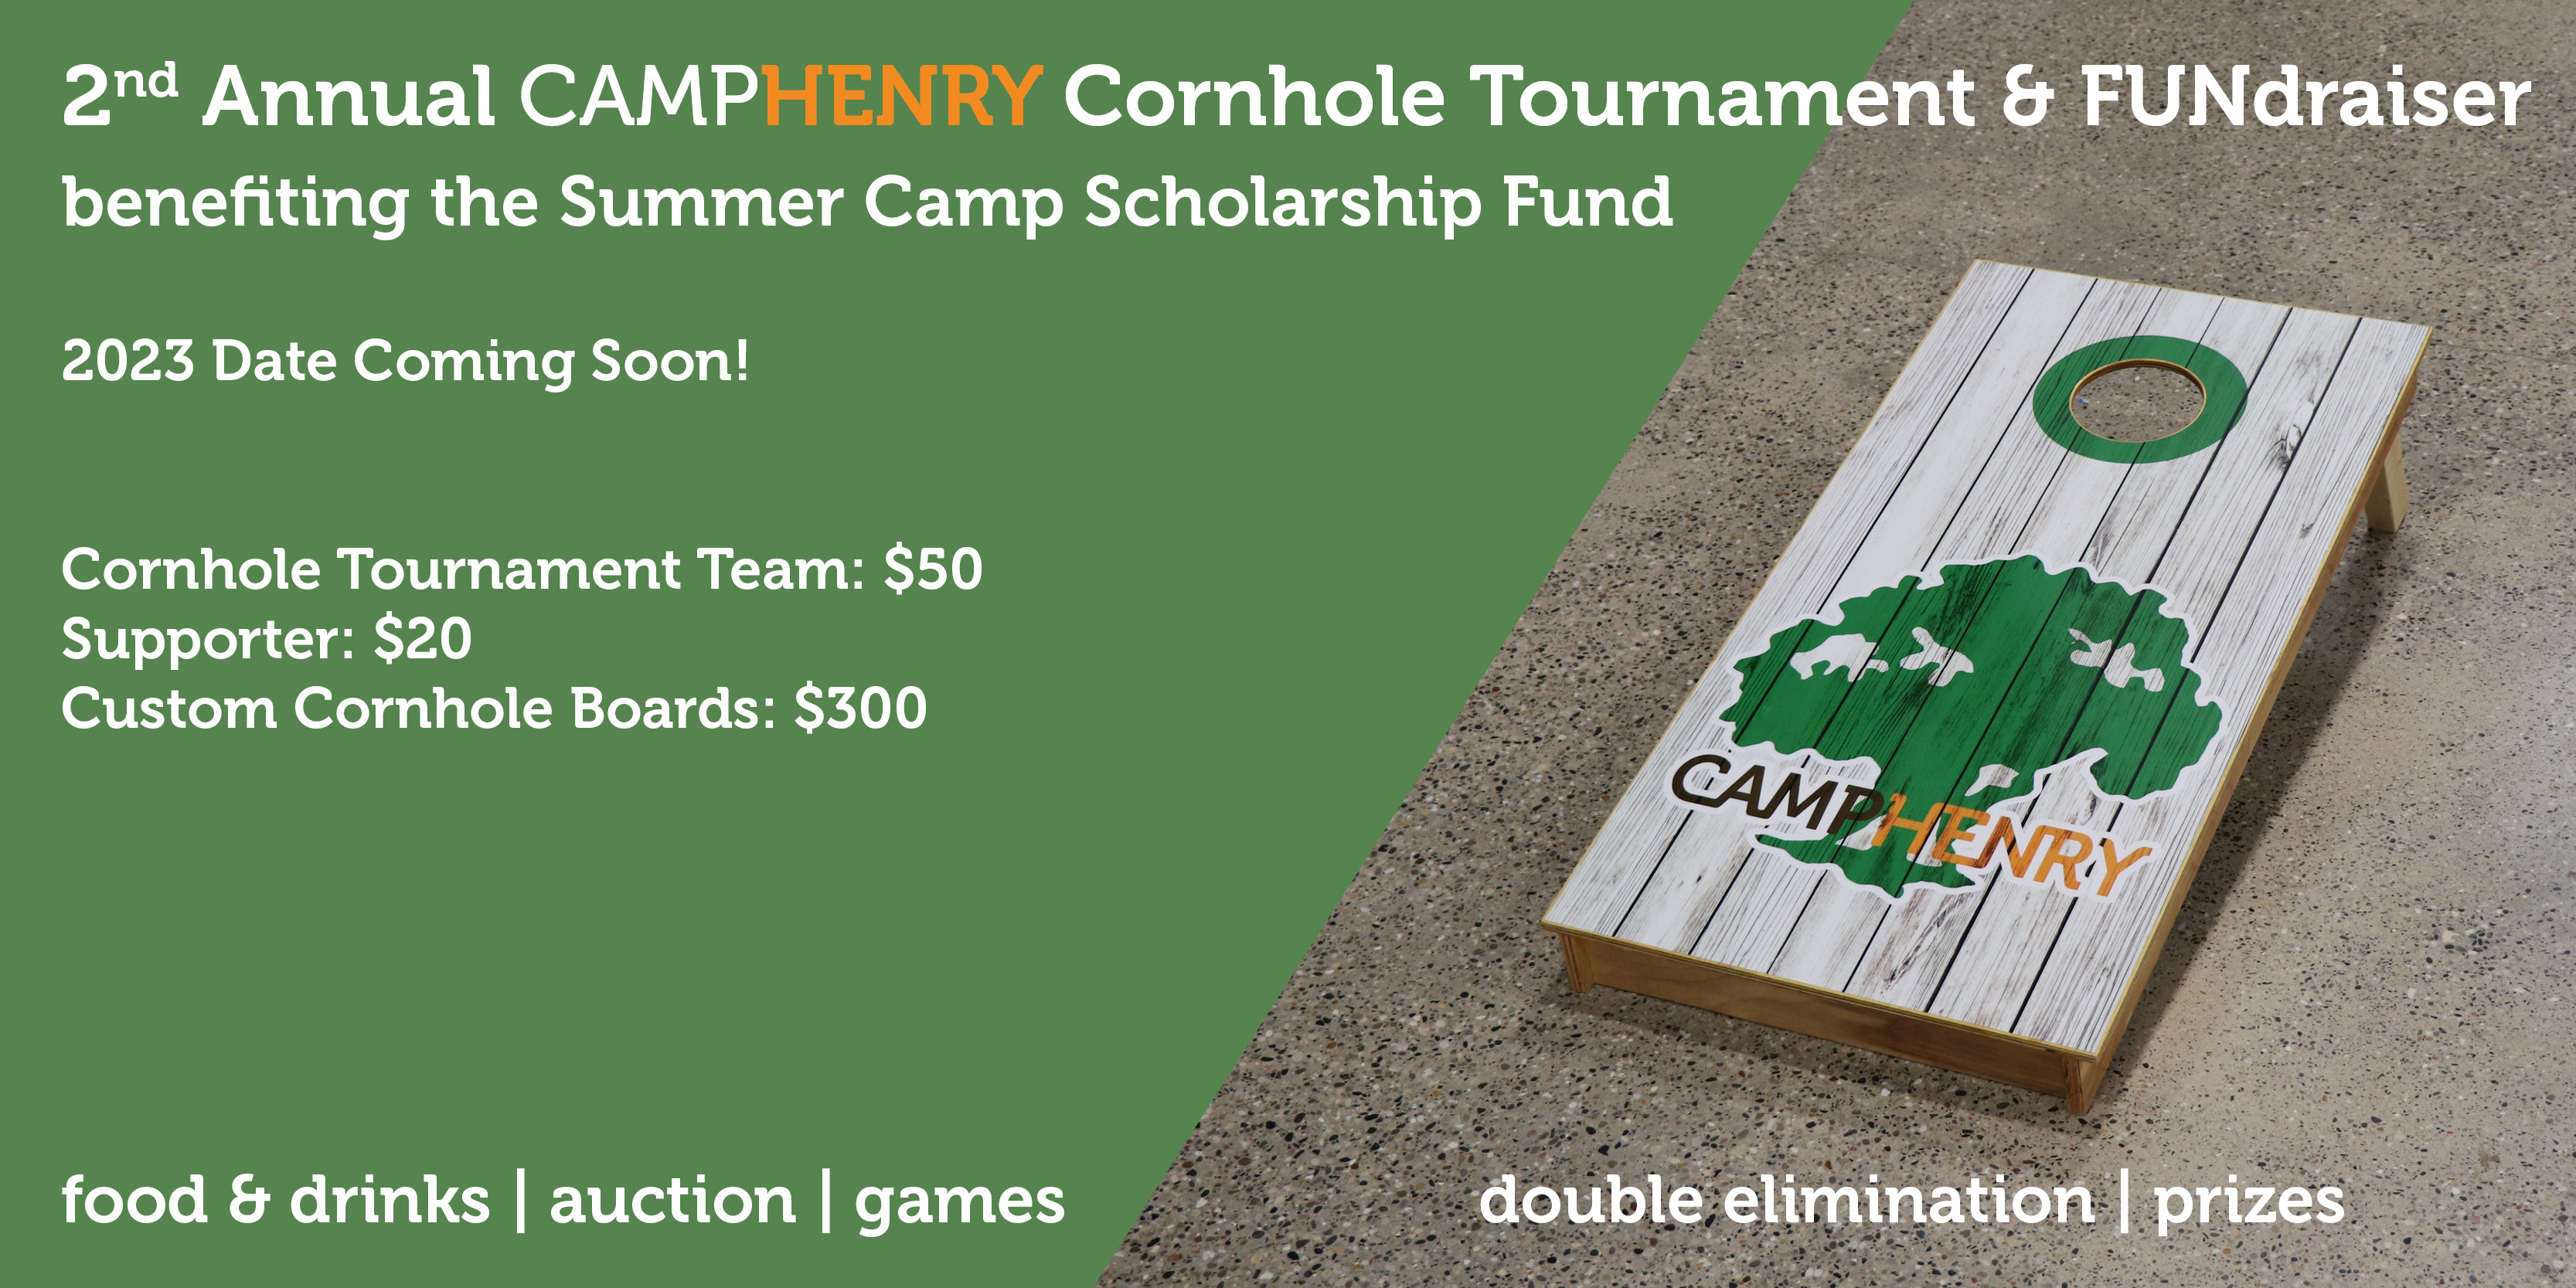 Camp Henry Cornhole Tournament & FUNdraiser 2022